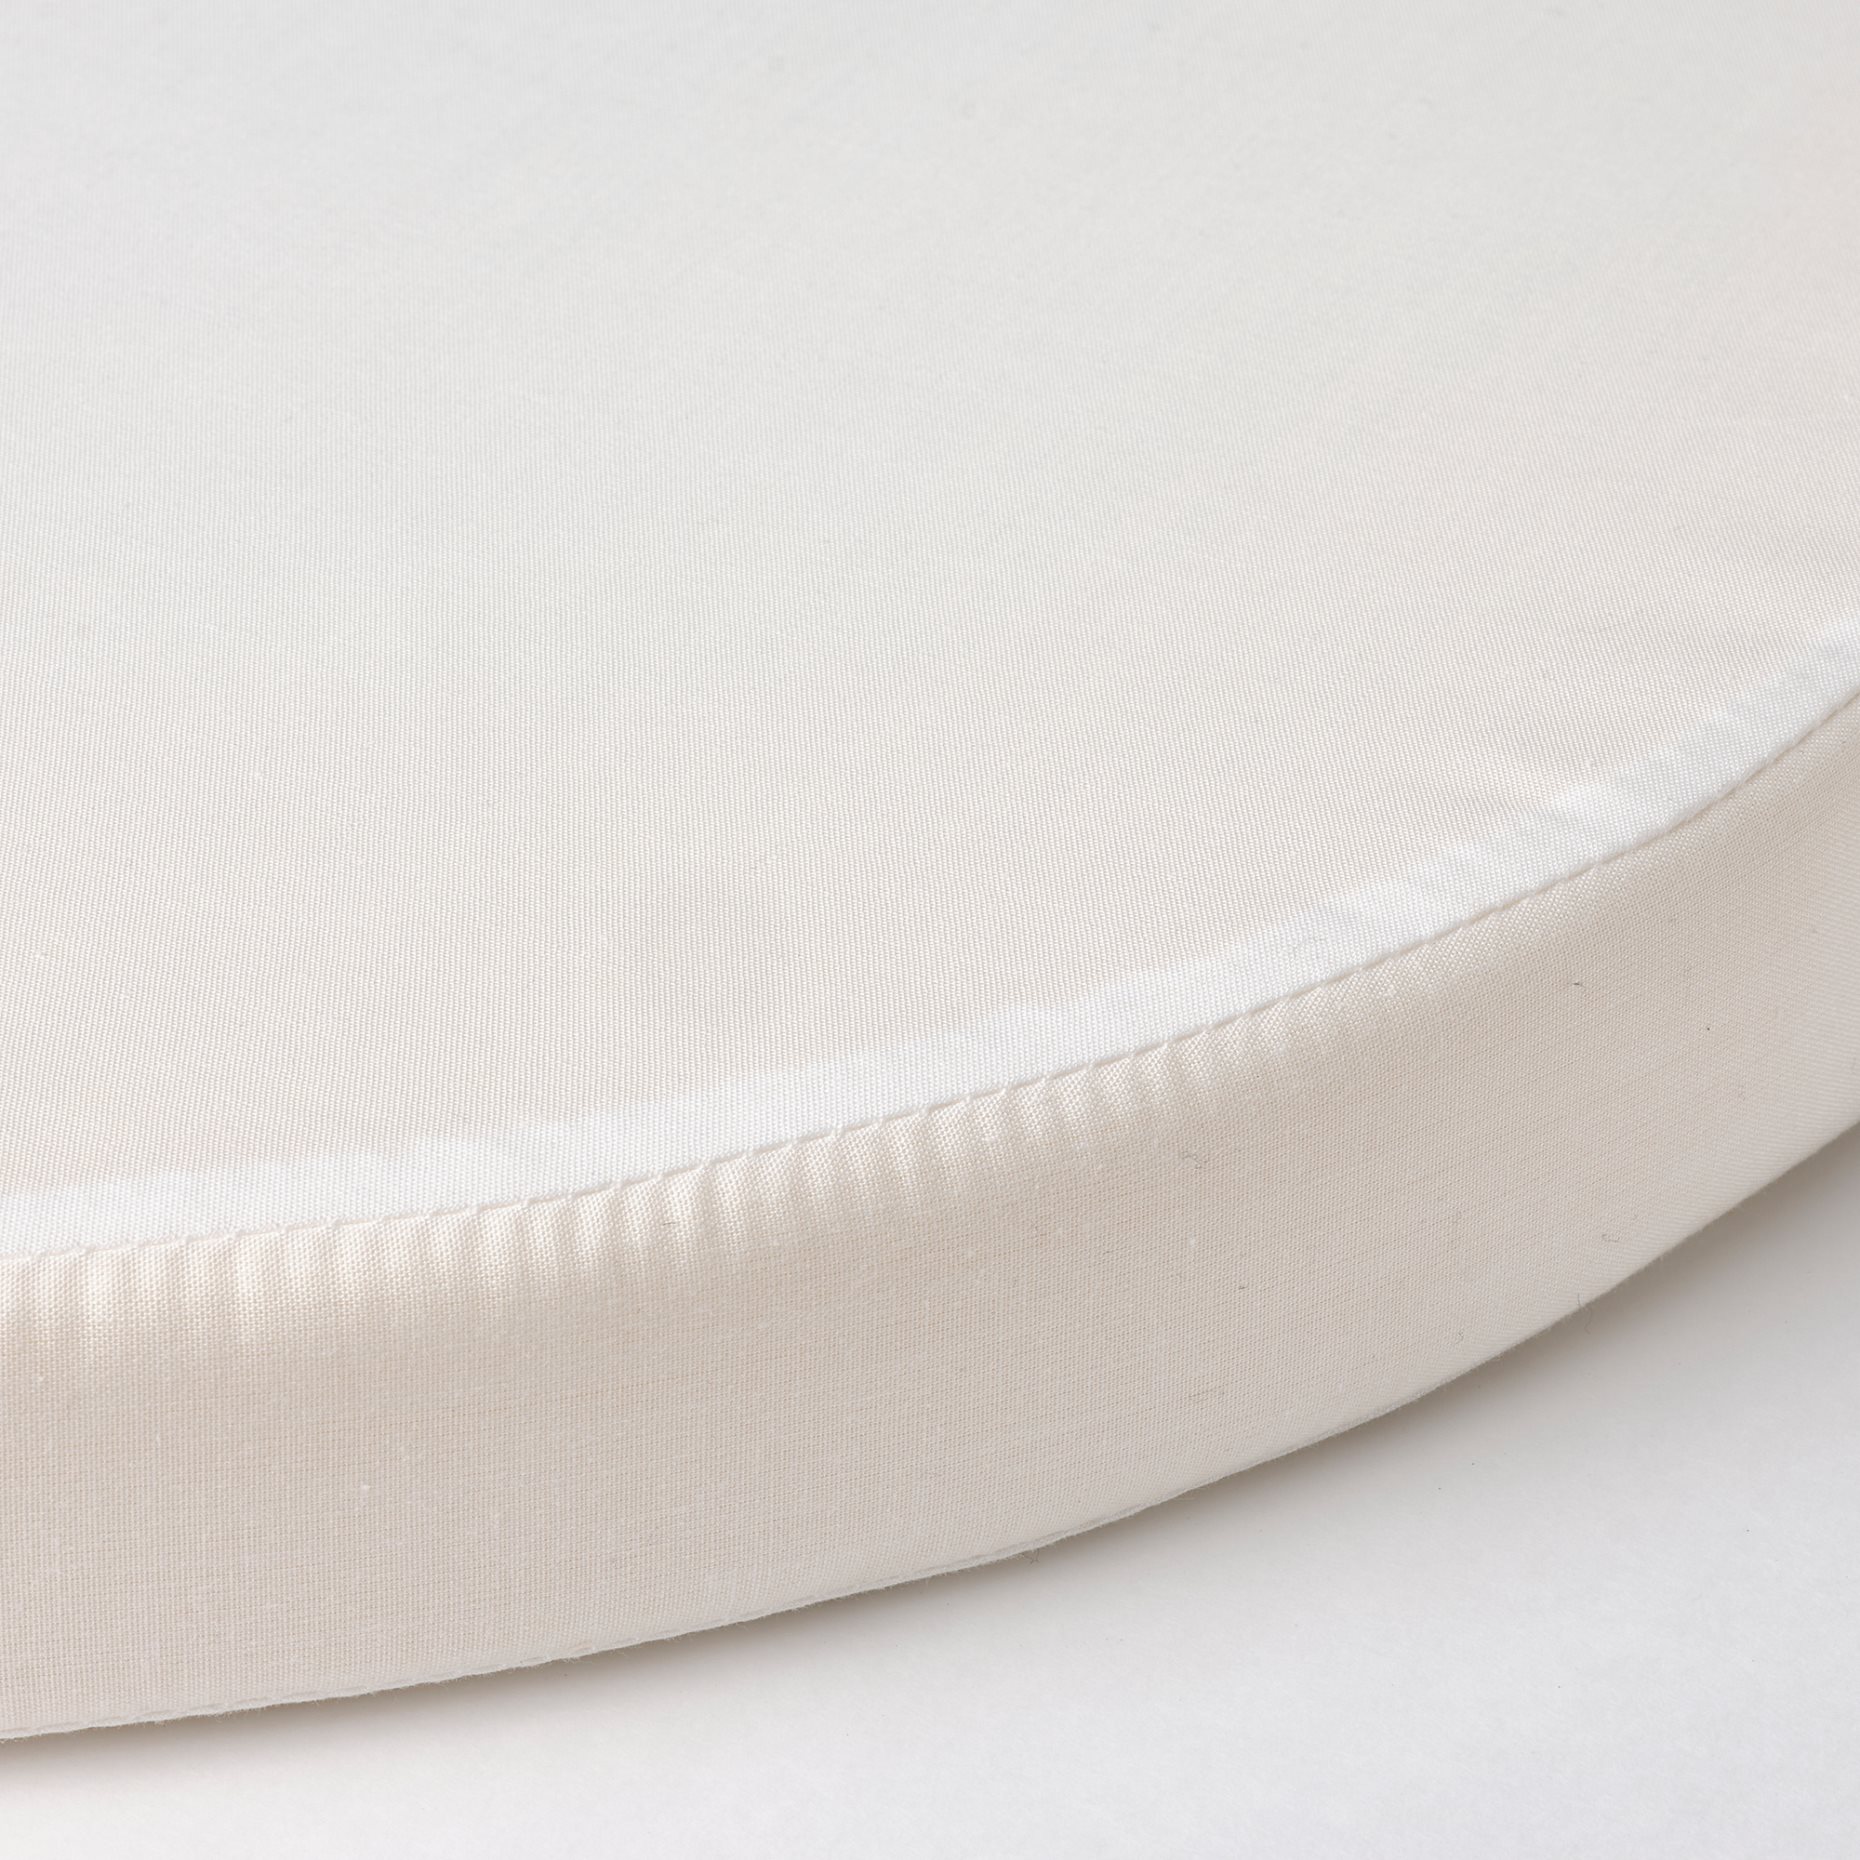 ALSKVARD, mattress for bassinet, 40x73x3.5 cm, 405.154.22